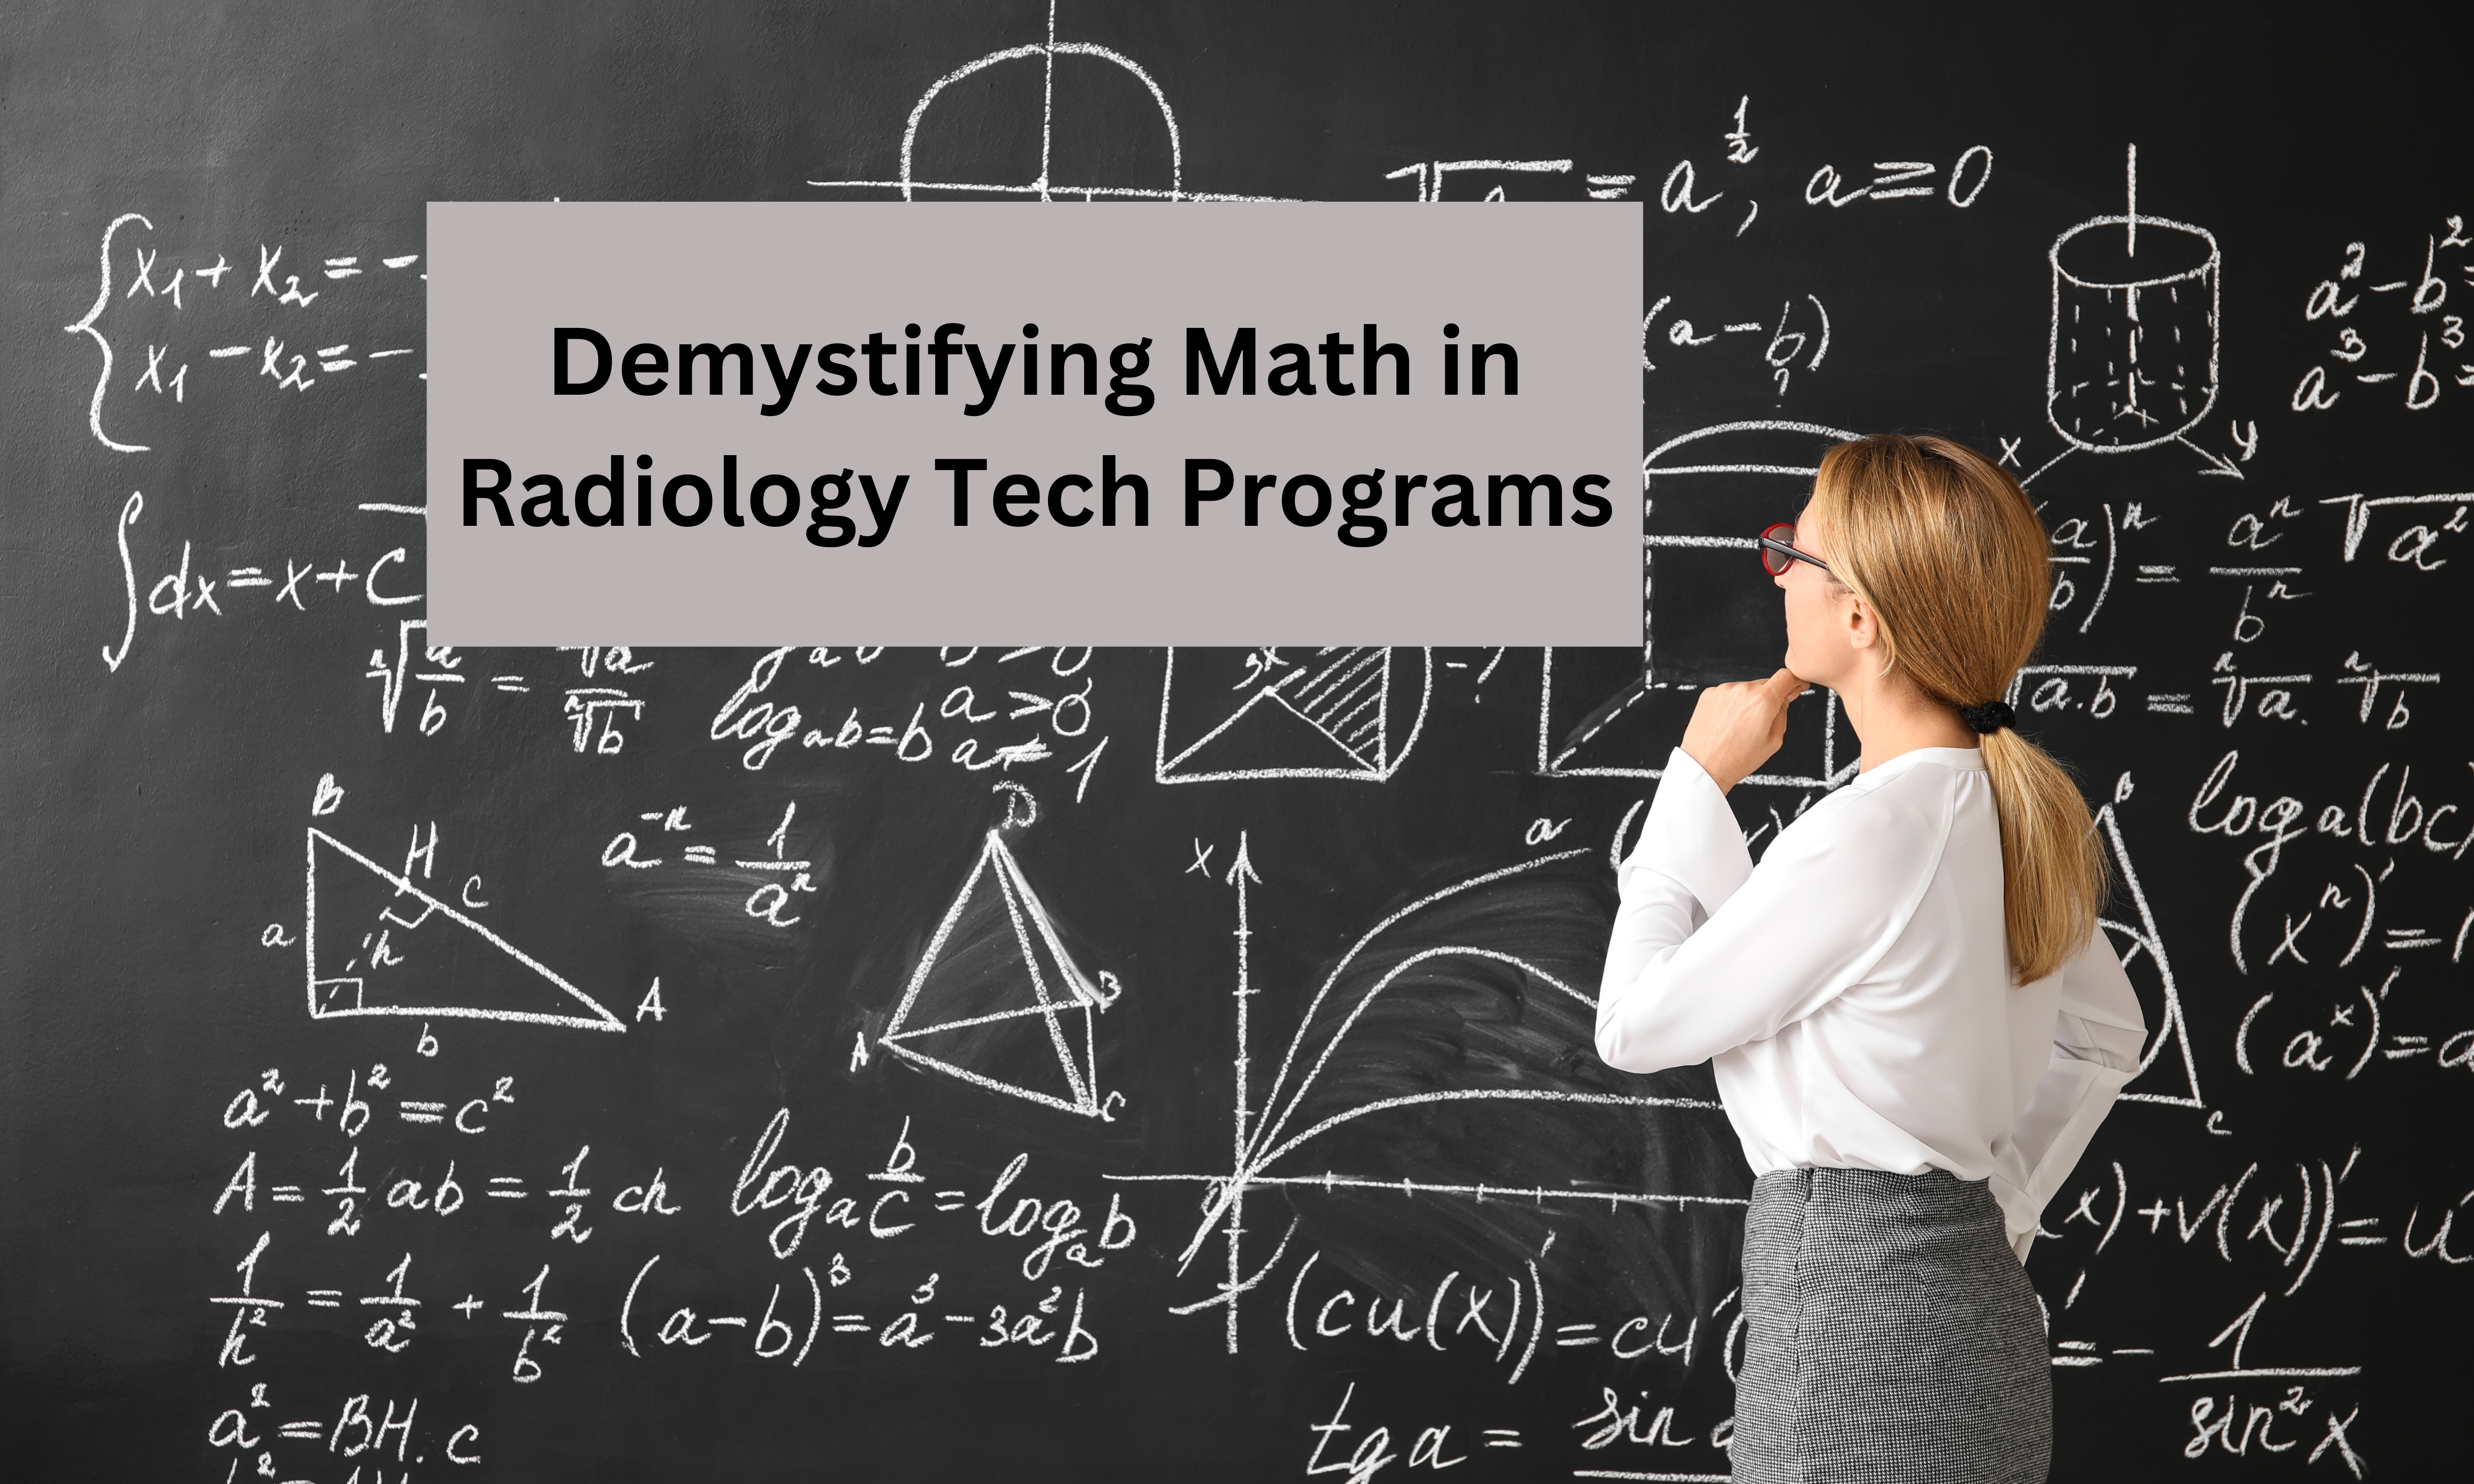 Demystifying Math in Radiology Tech Programs